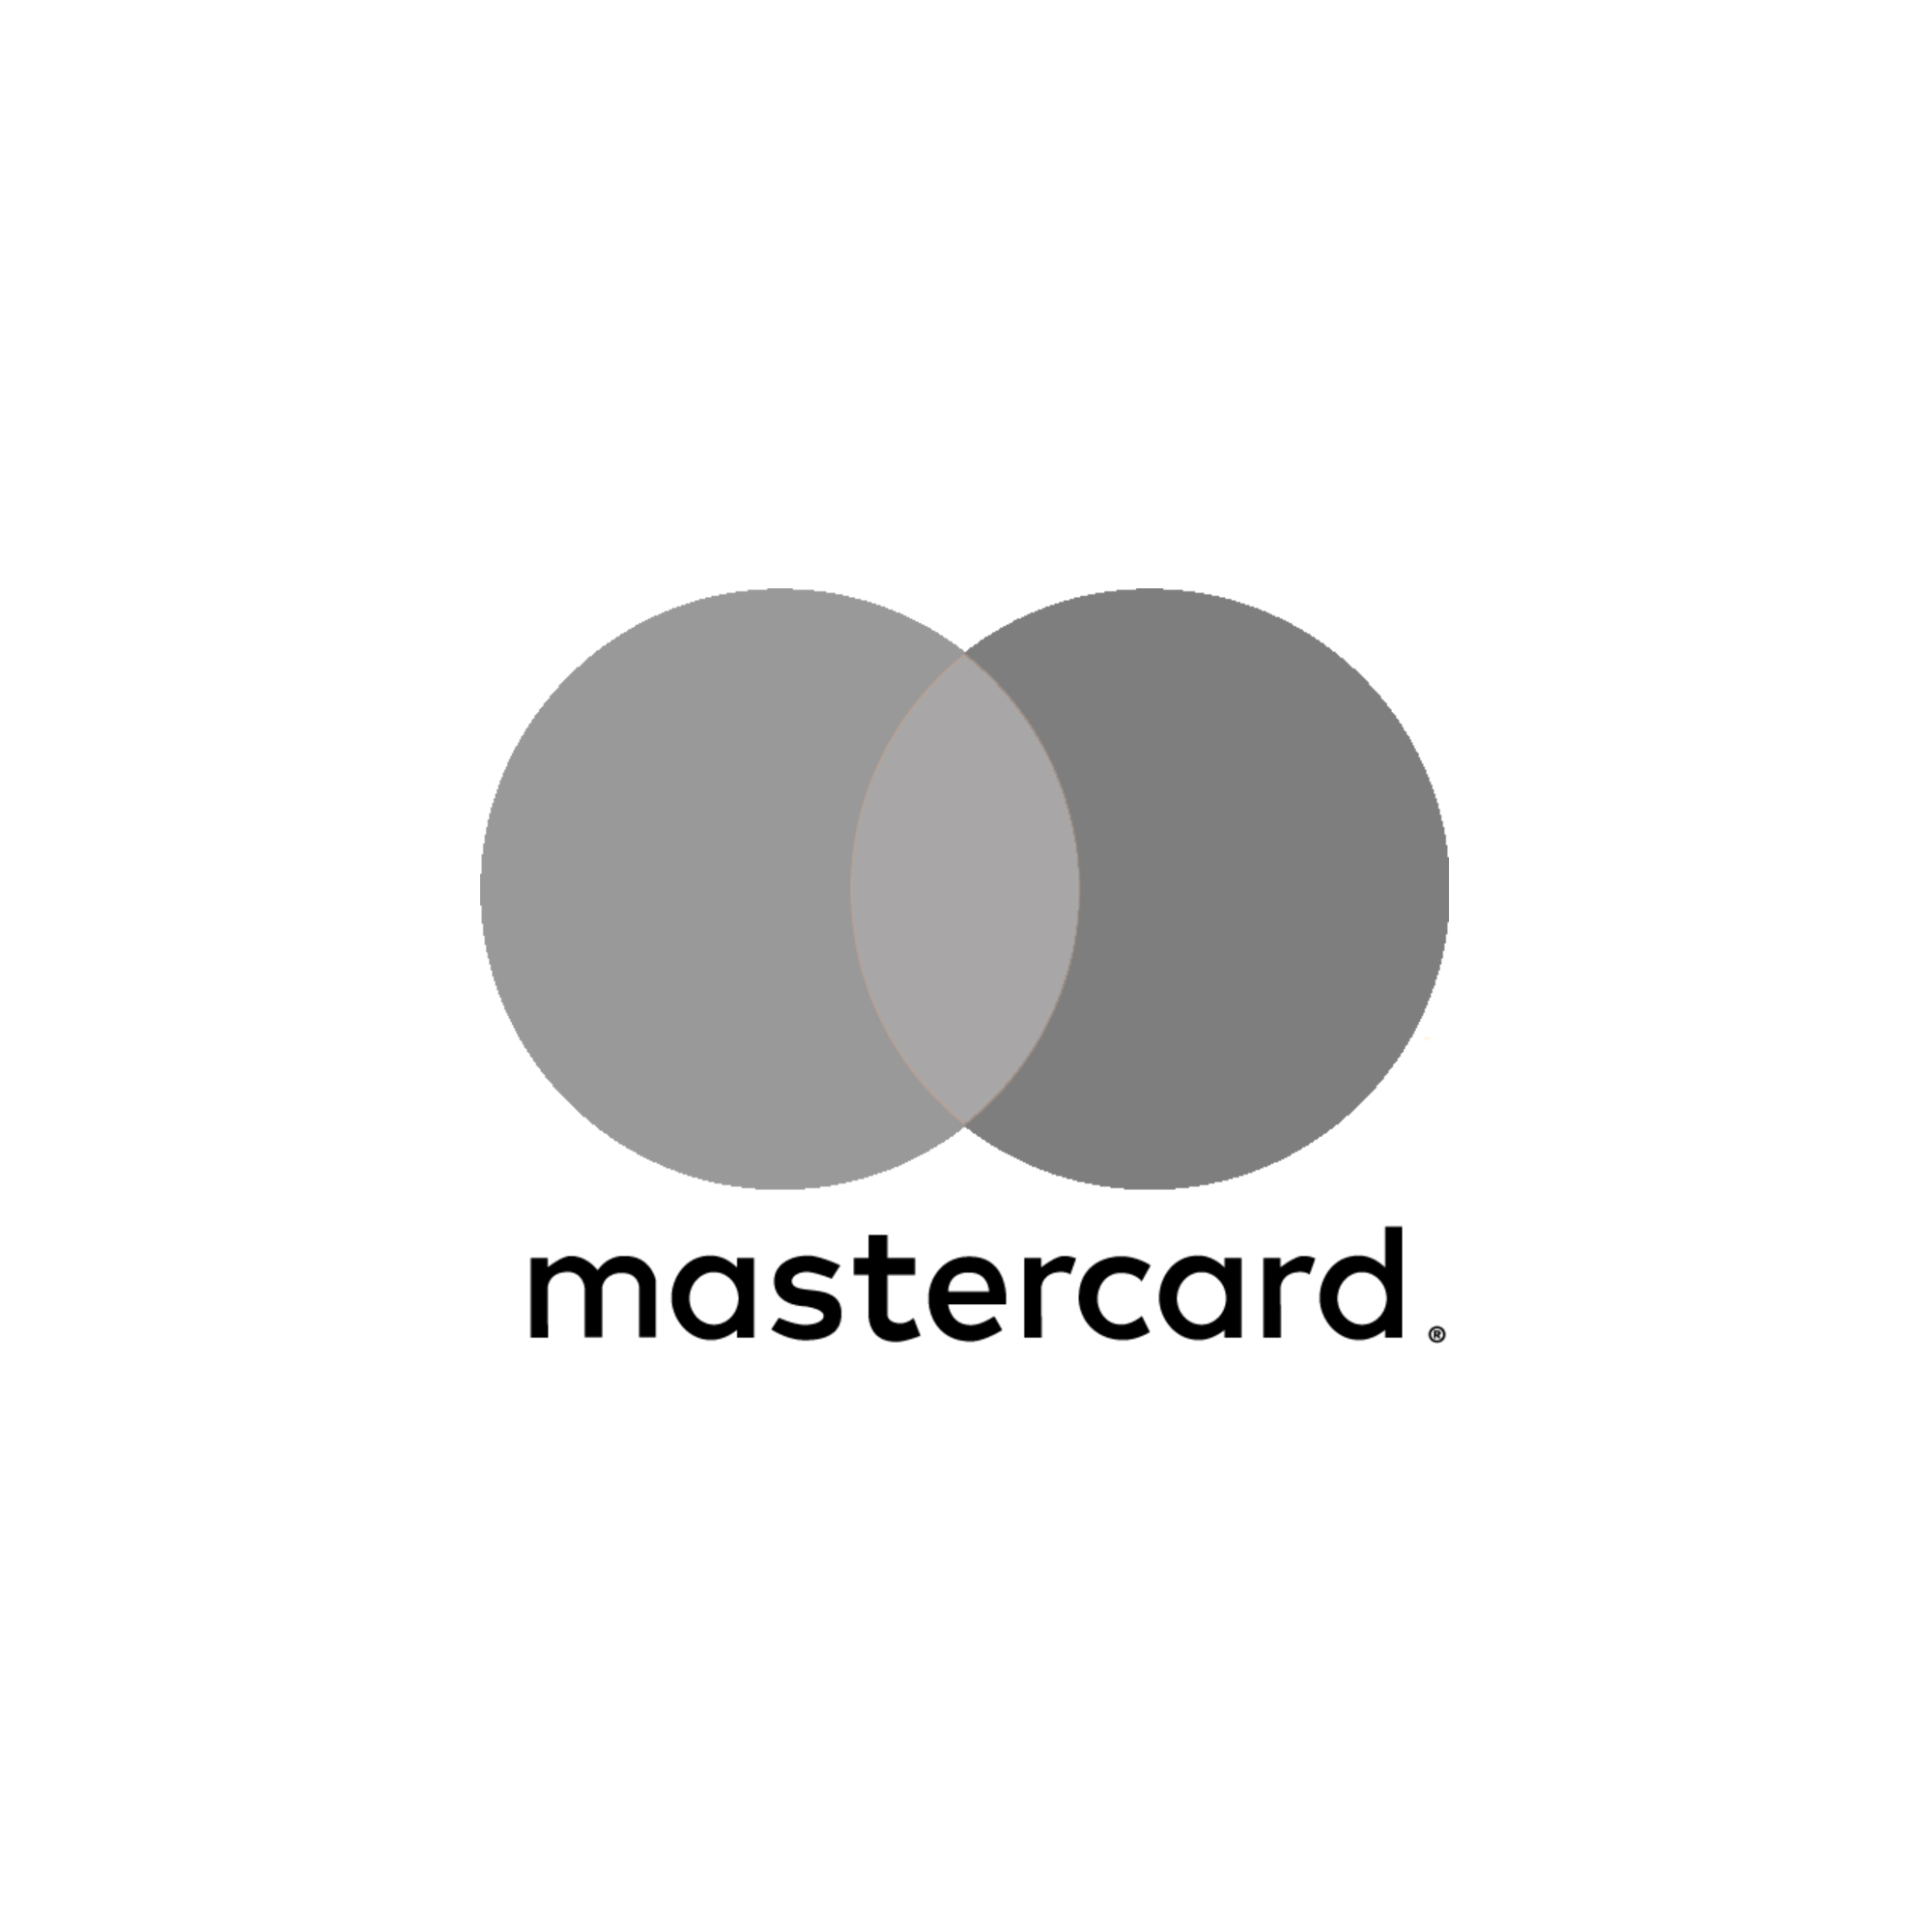 4_Mastercard.jpg